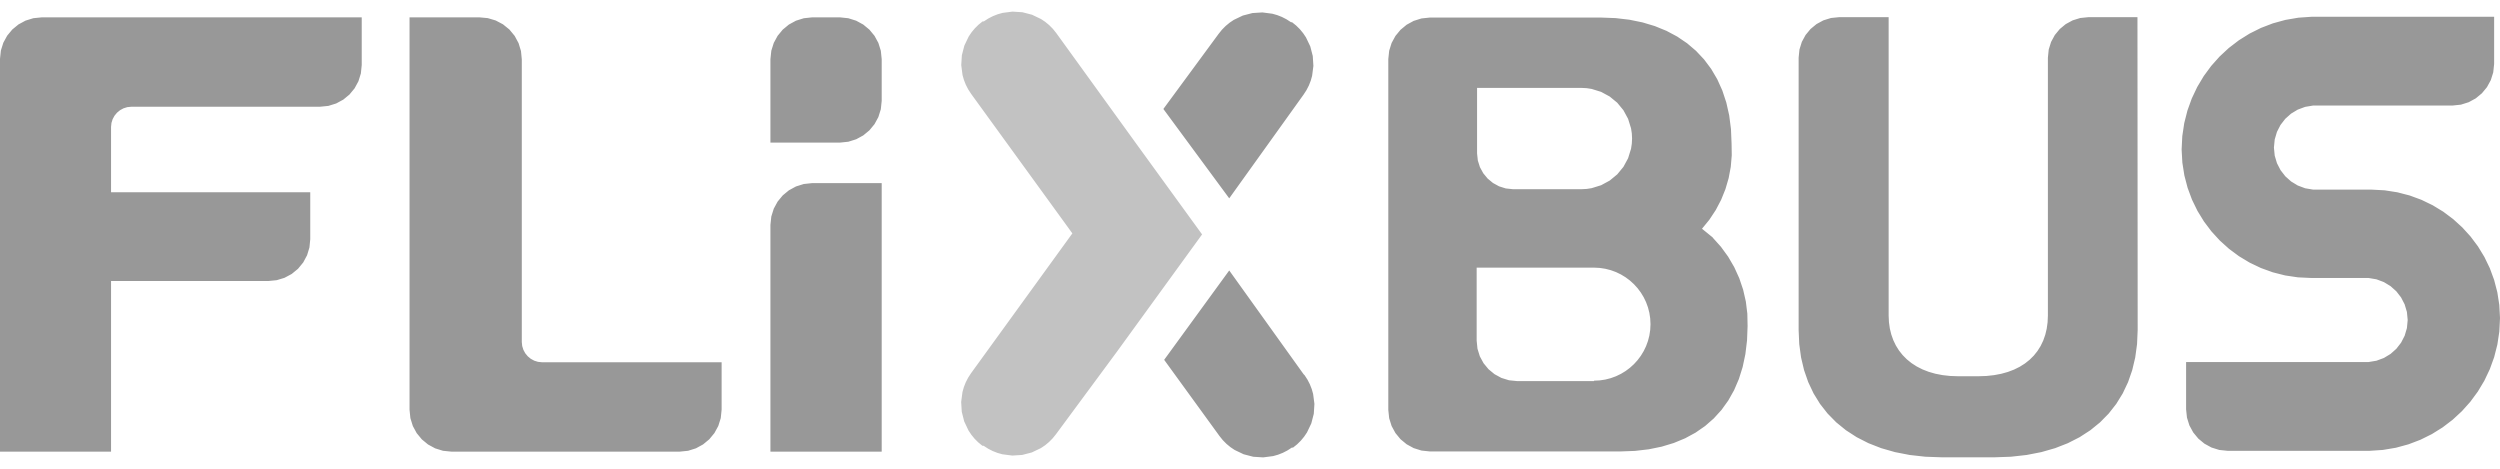 flixbus-201x-logo